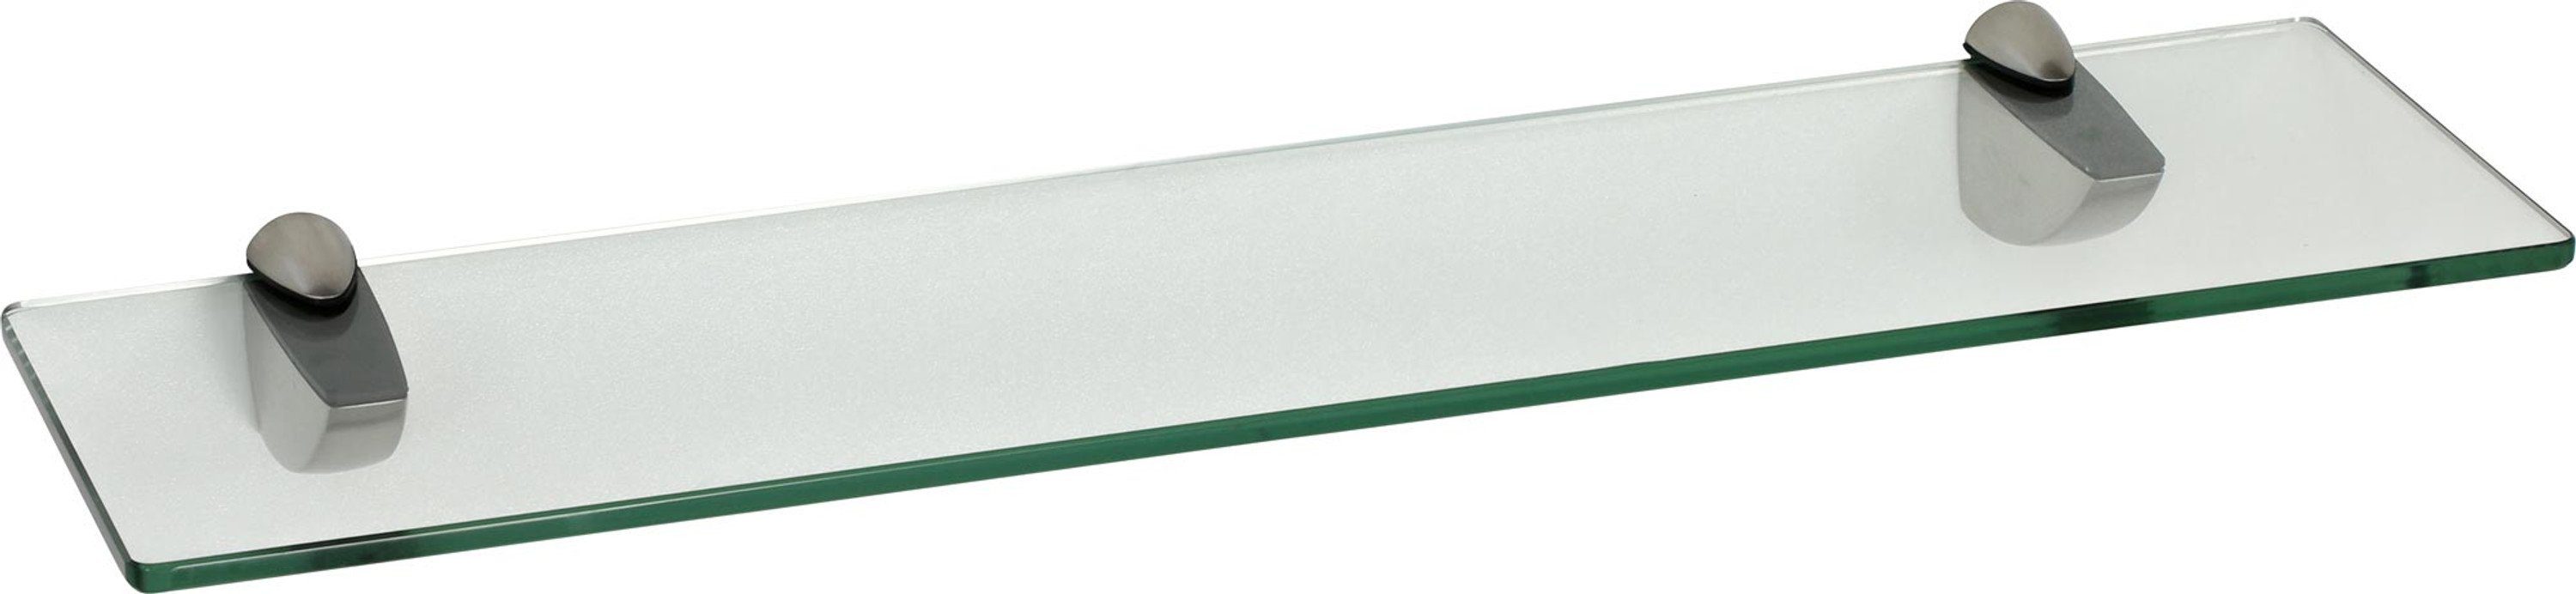 ib style Wandregal Glasregal 10mm klar 40 x 15 cm + Clip PELI Edelstahloptik, Glasboden aus ESG-Sicherheitsglas - Wandregal | Wandregale